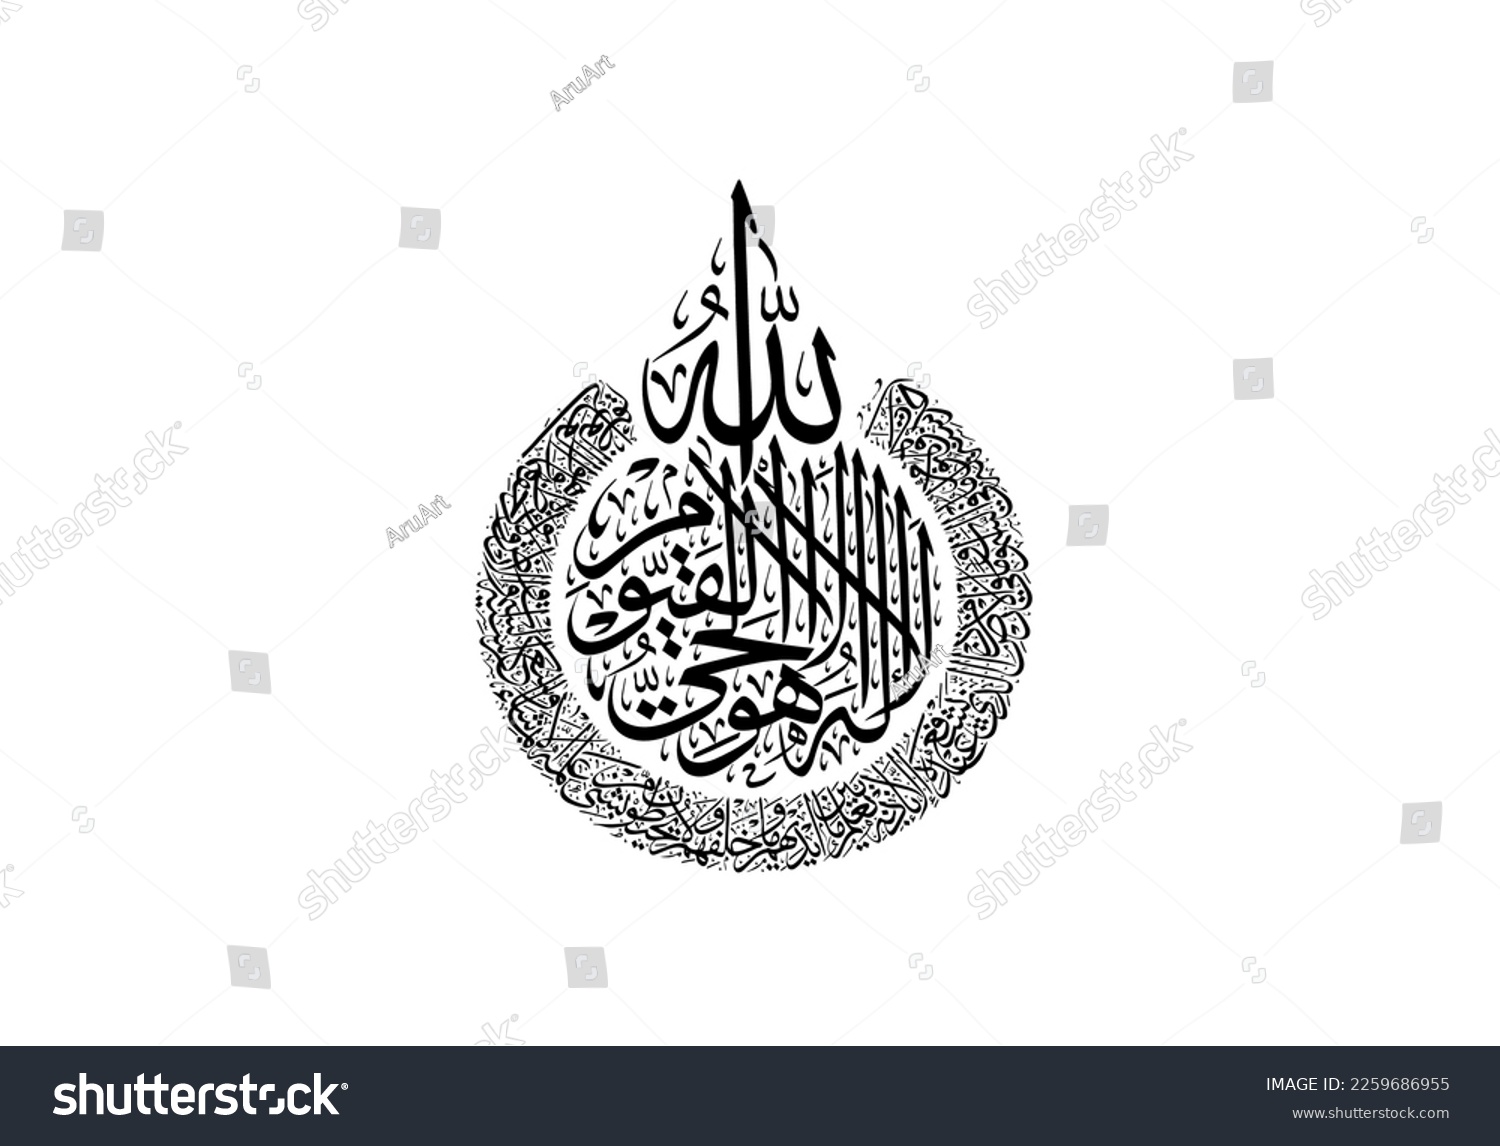 SVG of 	
Arabic Calligraphy of Ayatul Kursi, Ayat tul Kursi. Surah Al Baqarah 2, 255 of the Noble Quran. Translation, 